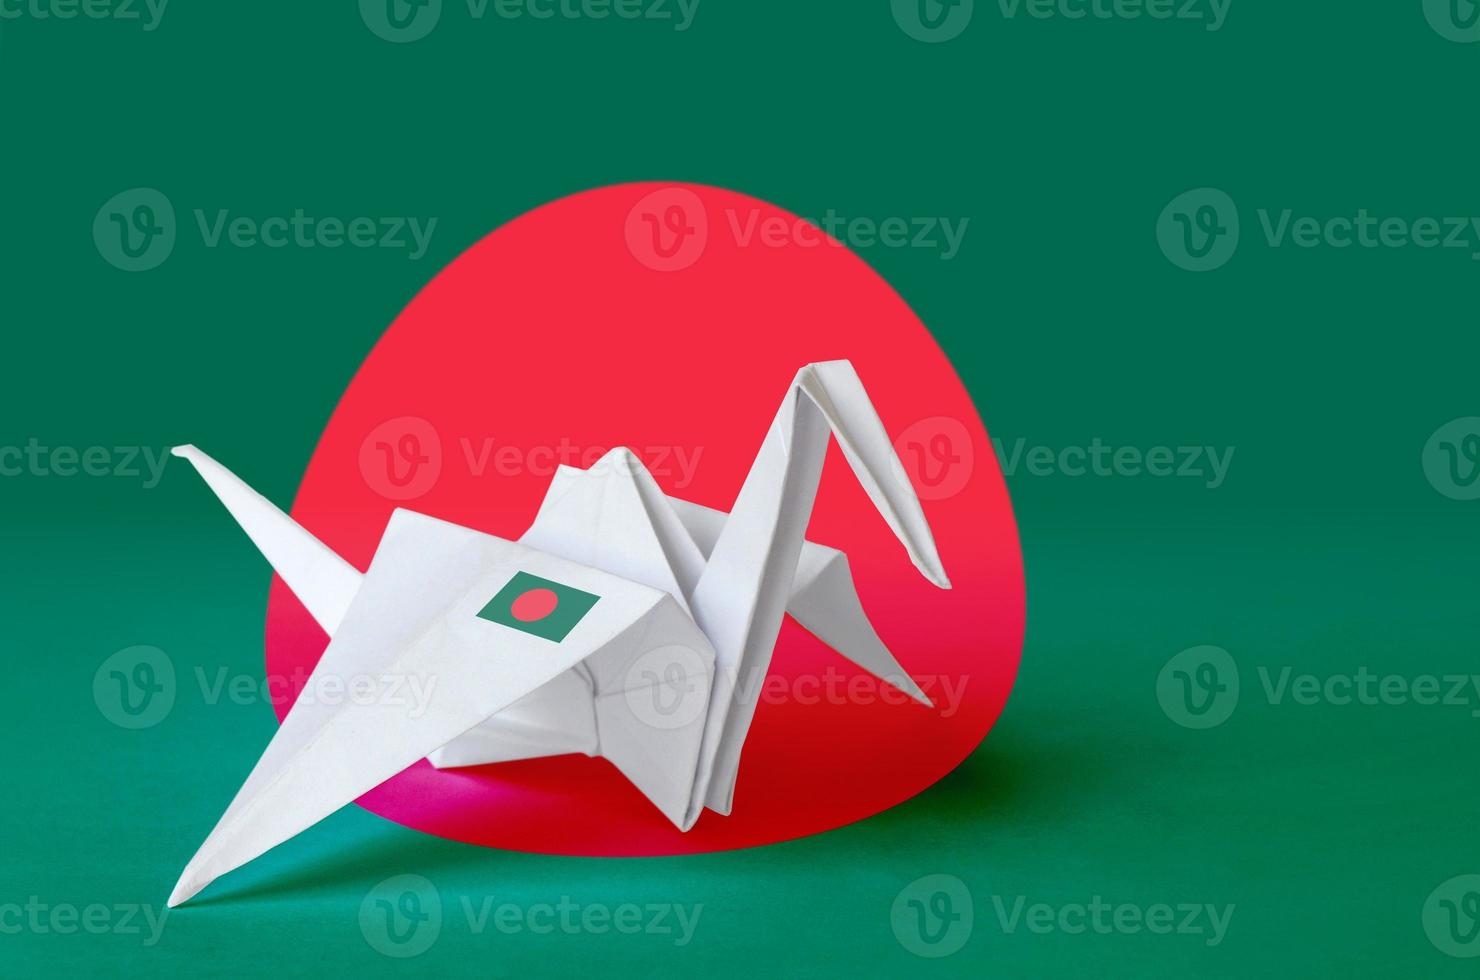 bangladesh flagga avbildad på papper origami kran vinge. handgjort konst begrepp foto